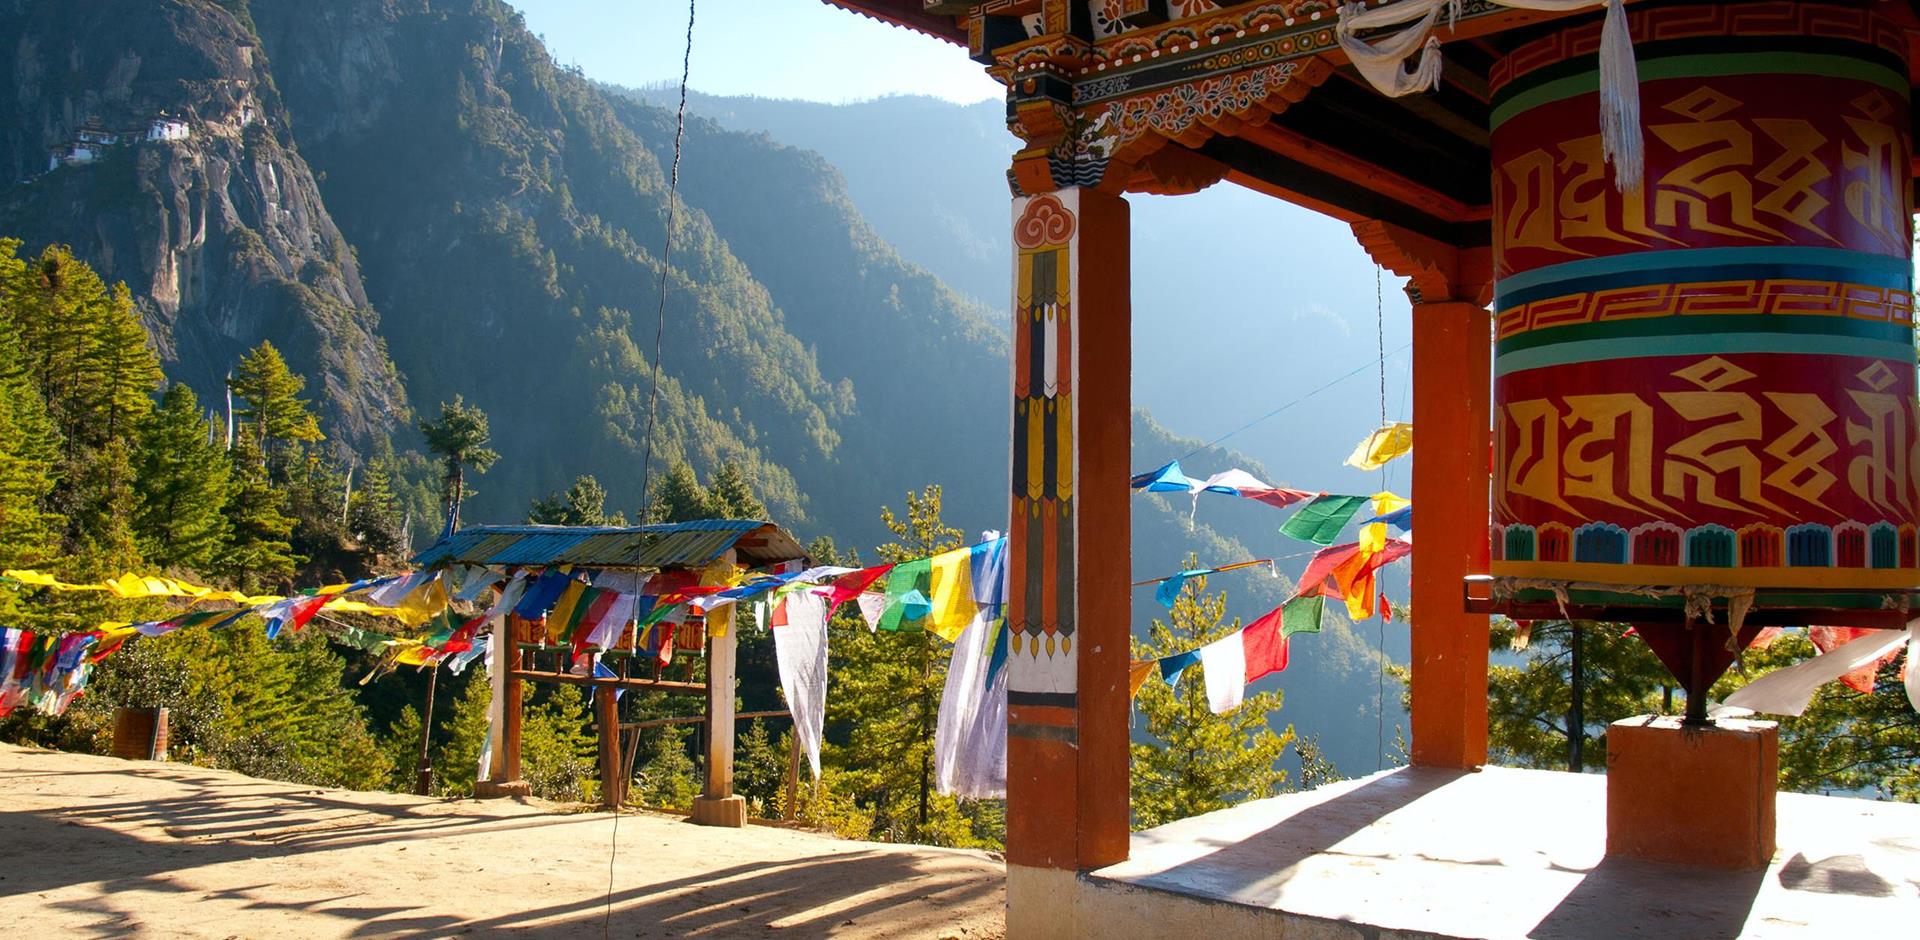 Taktshang monastery, Paro, Bhutan